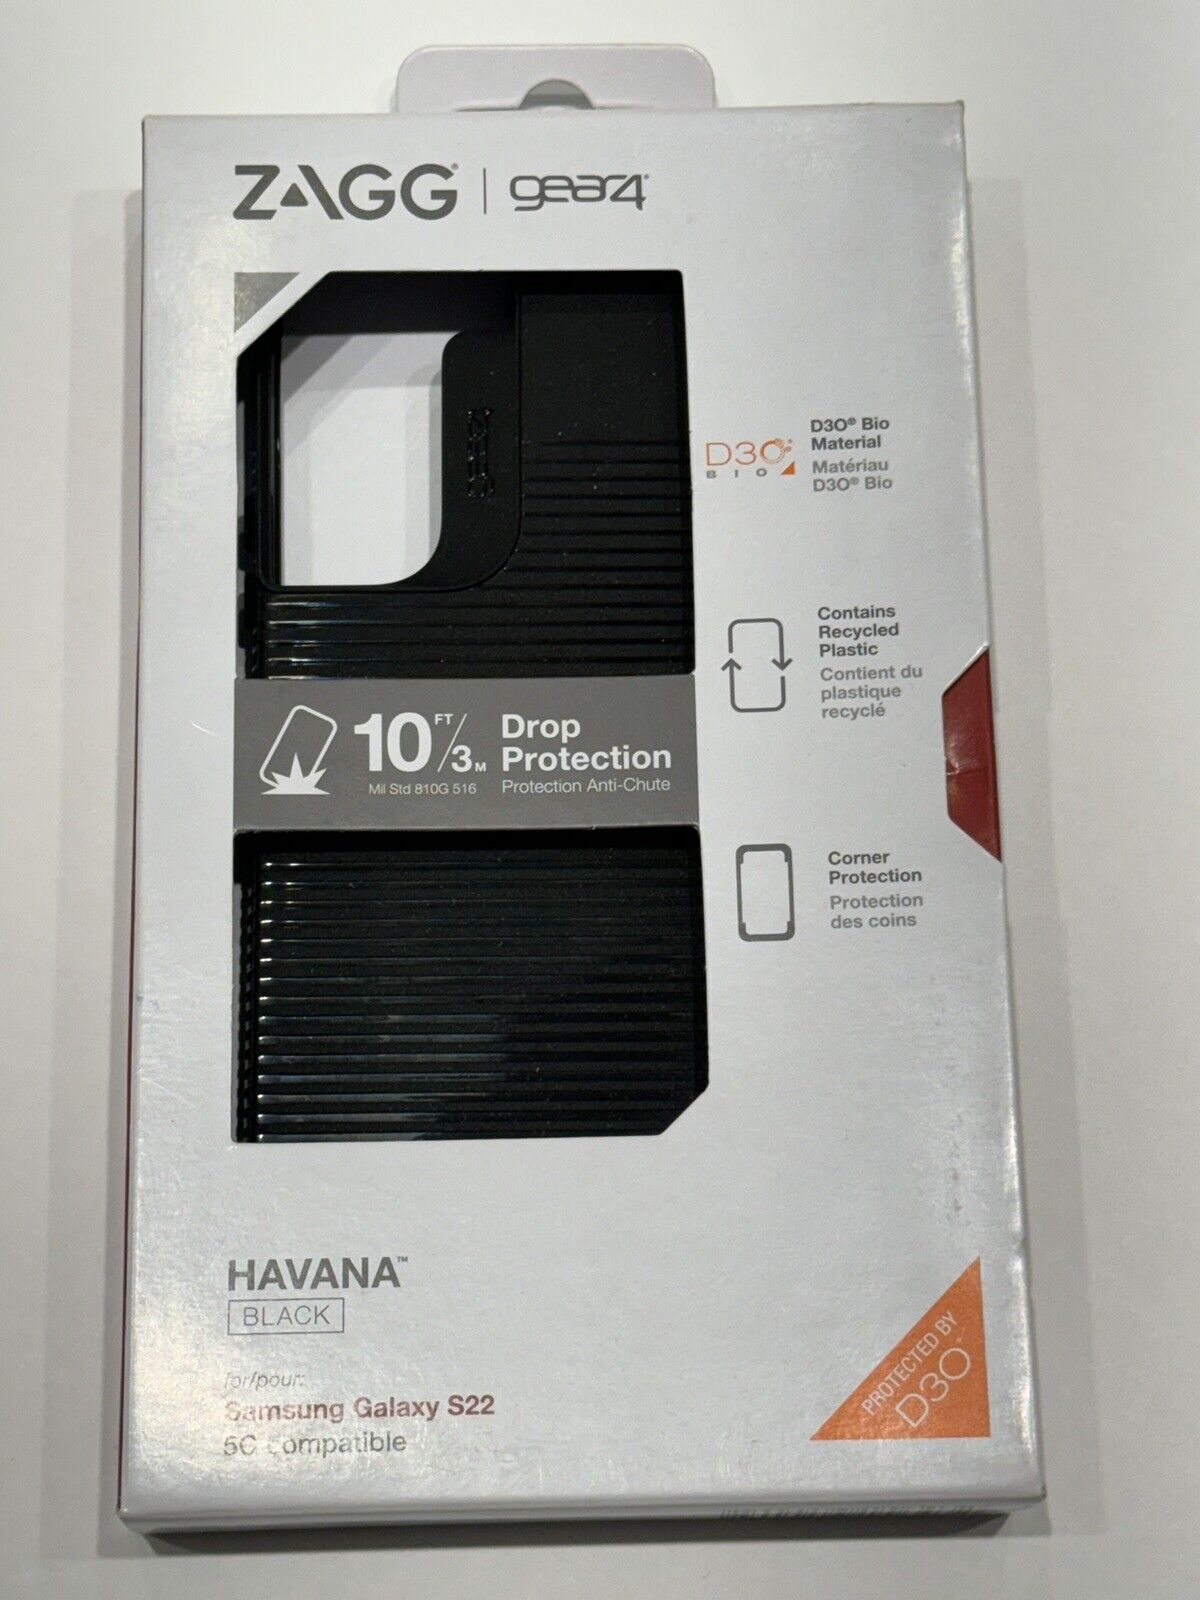 ZAGG Gear4 Havana Series Case for Samsung Galaxy S22 - Black zagg 702009122